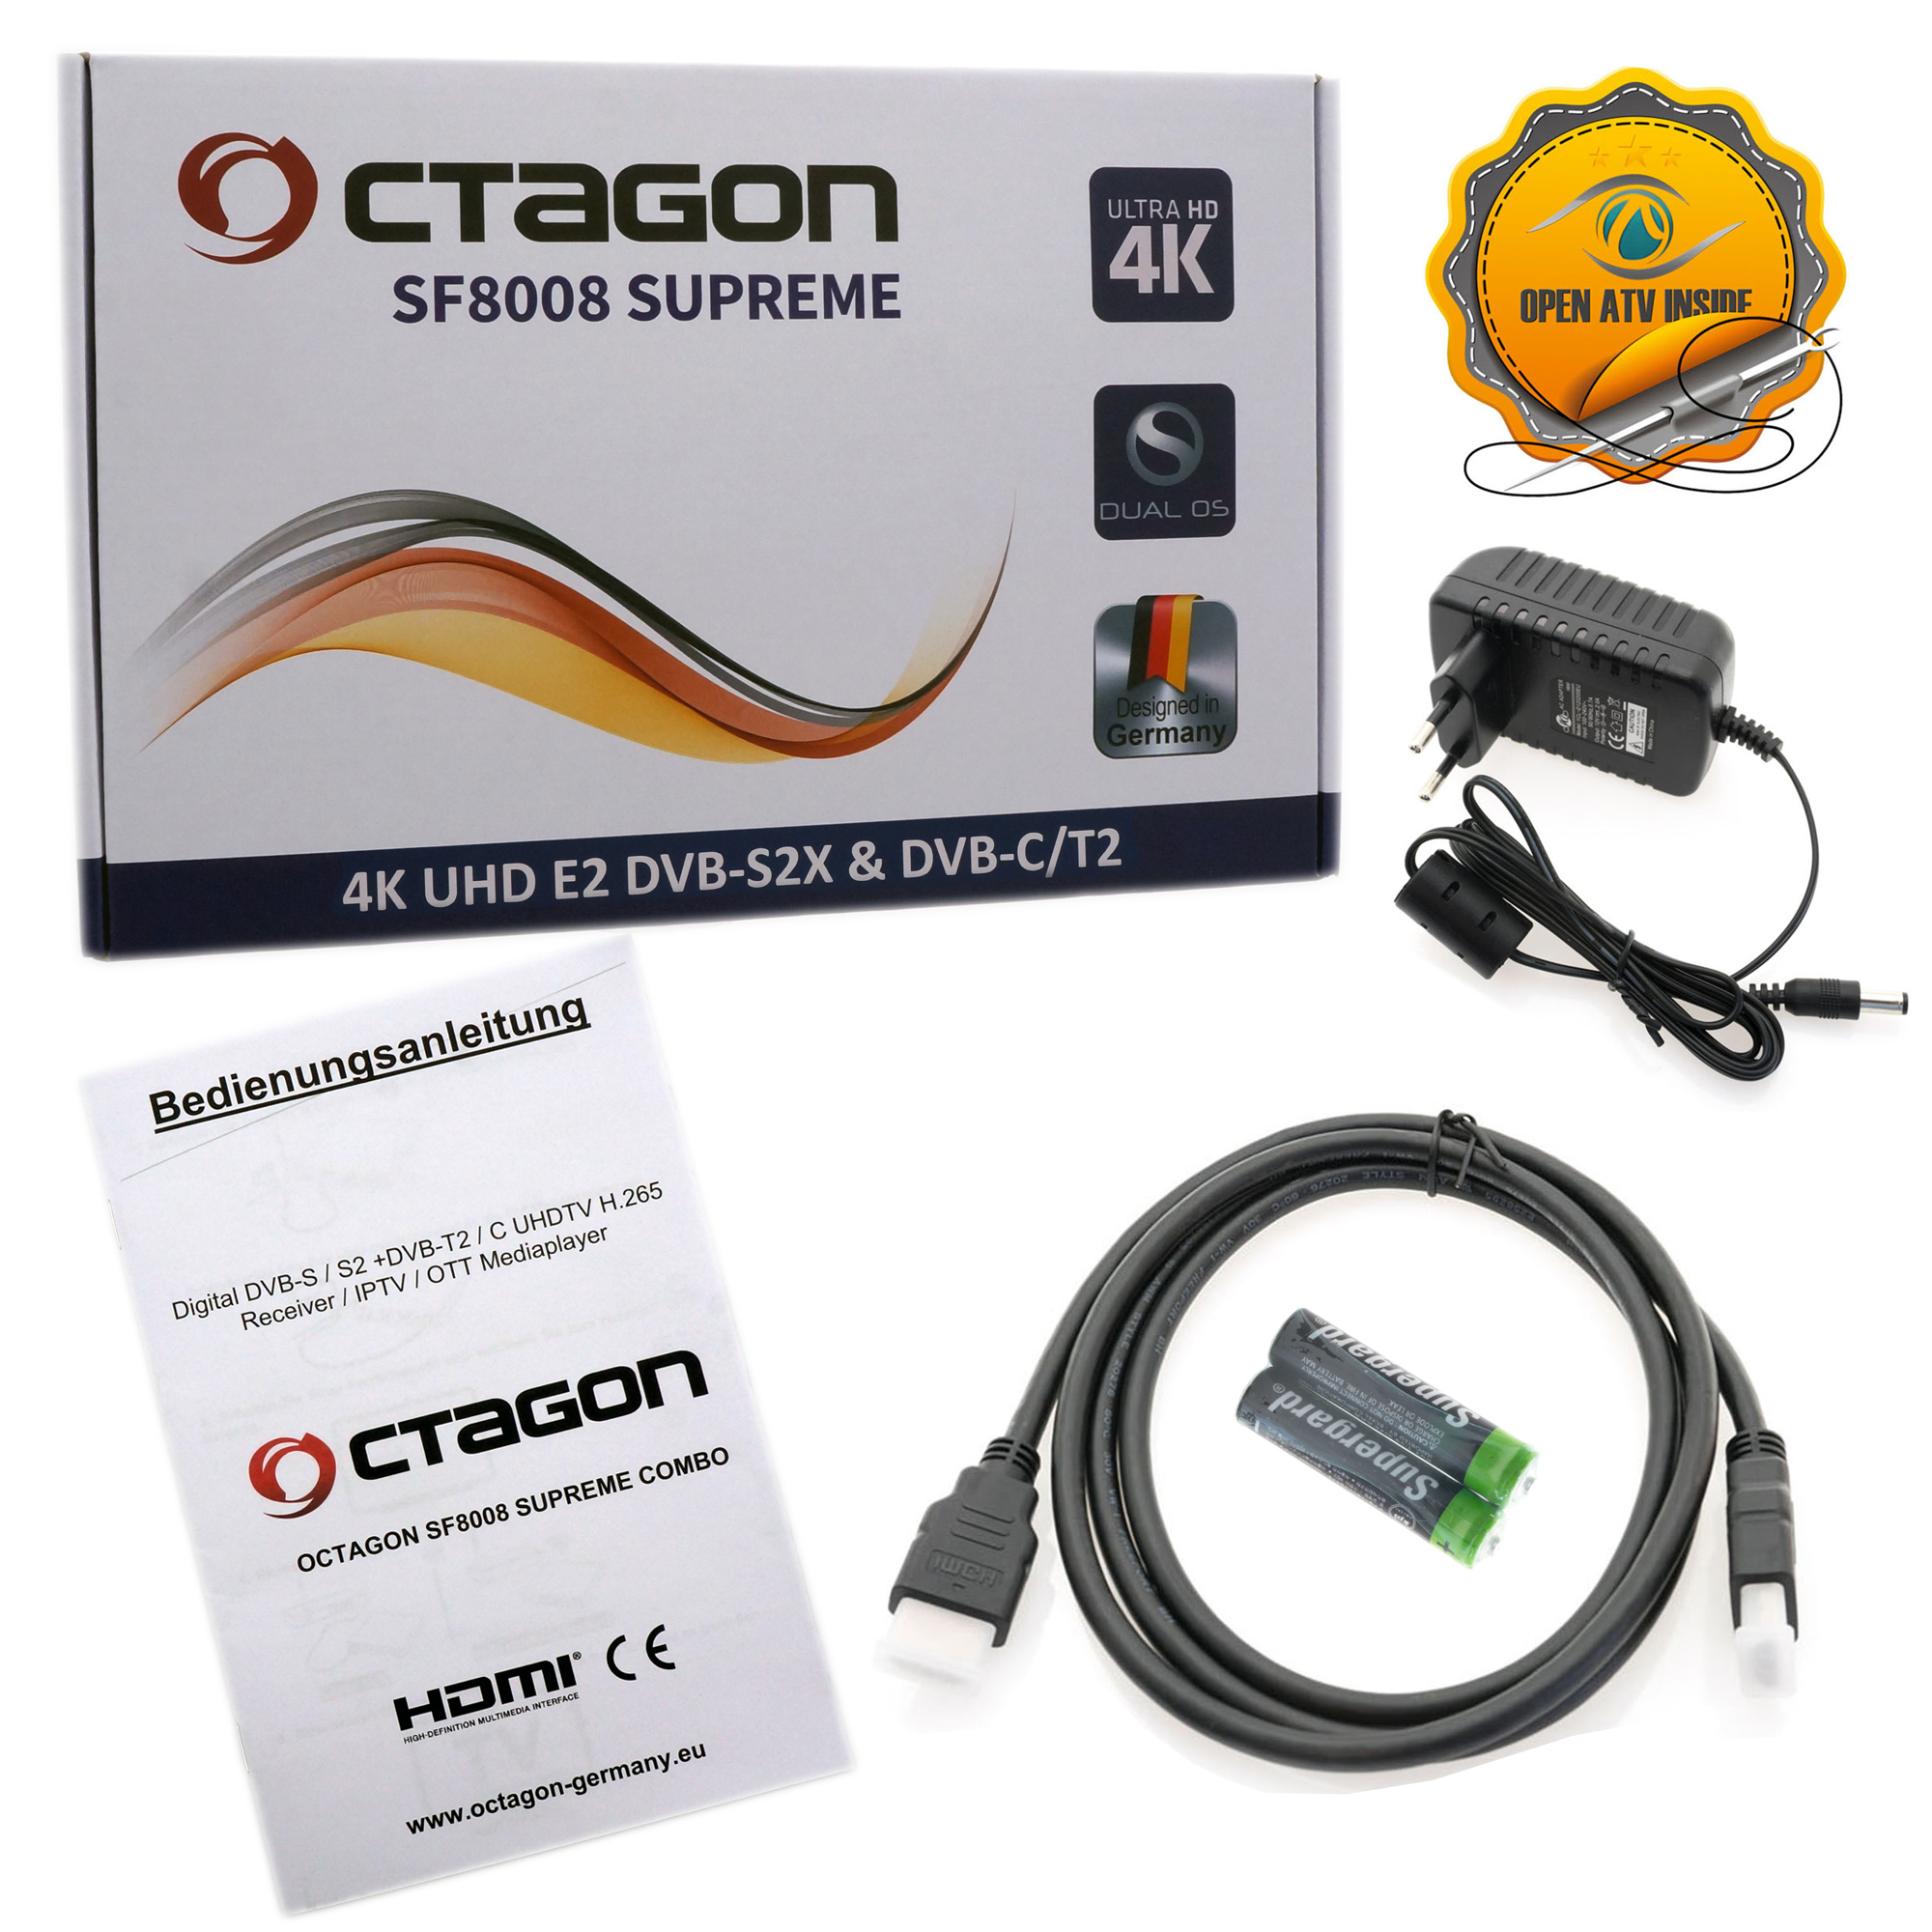 OCTAGON SF8008 SUPREME Receiver DVB-C/T2 4K UHD Sat UHD SSD & E2 M.2 Receiver Combo Schwarz) 4K Tuner, (Twin mit Linux DVB-S2X 250GB